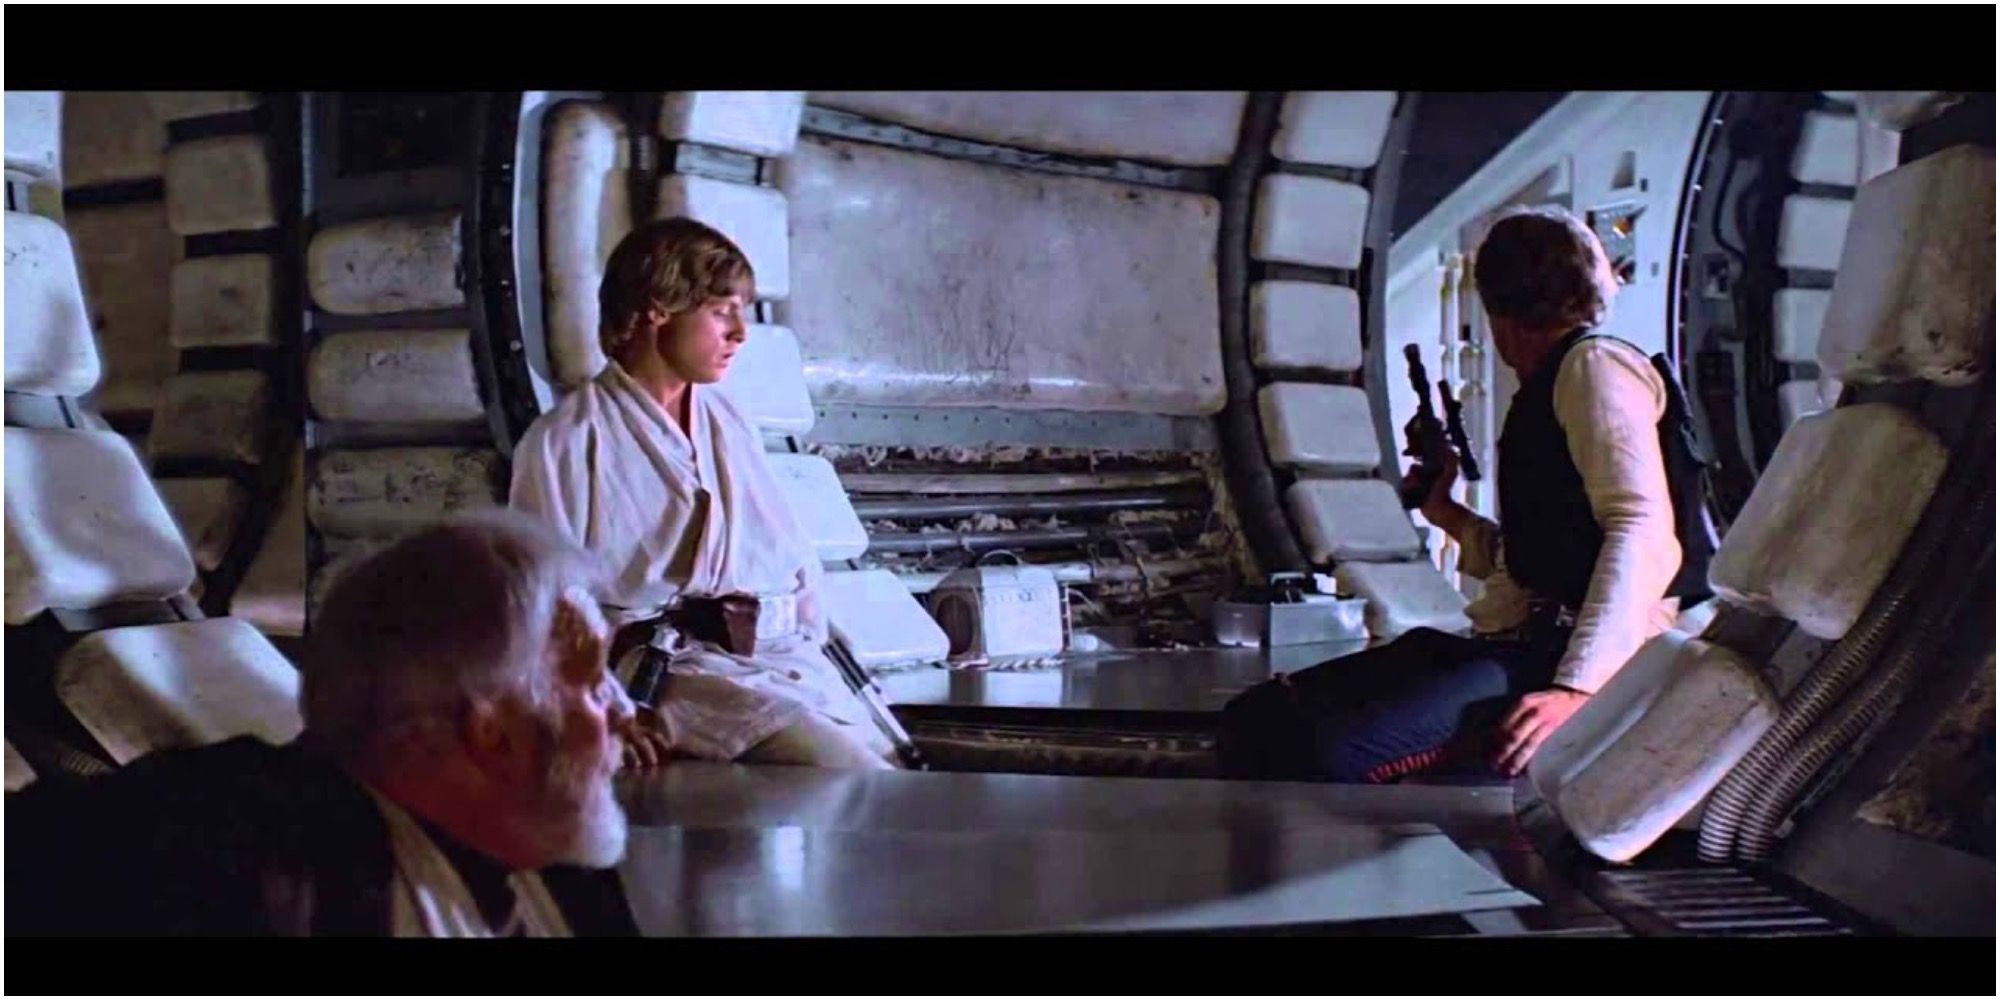 Obi-Wan warns Han Solo of foolishness